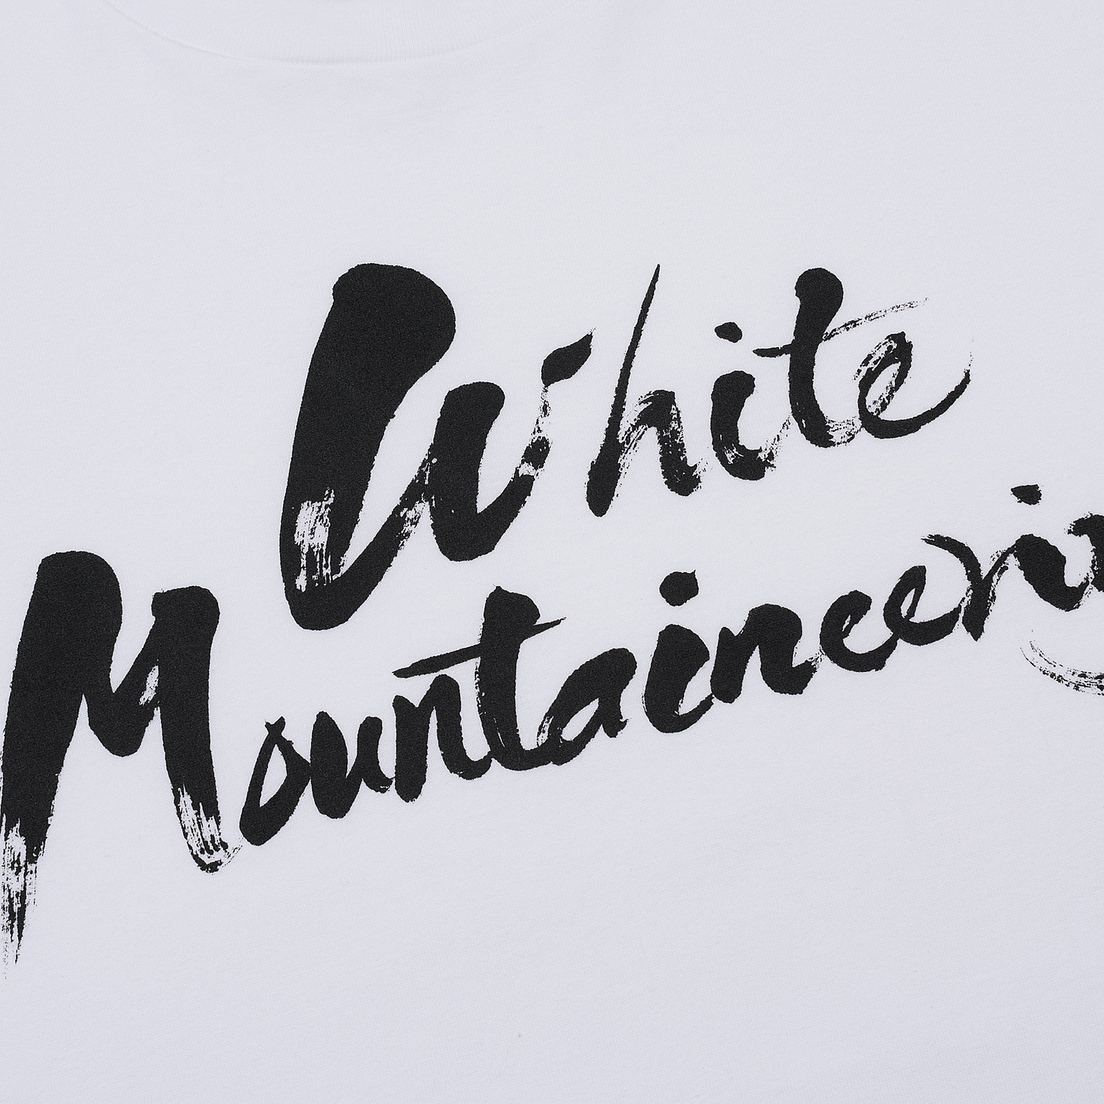 White Mountaineering Мужская футболка Printed White Mountaineering